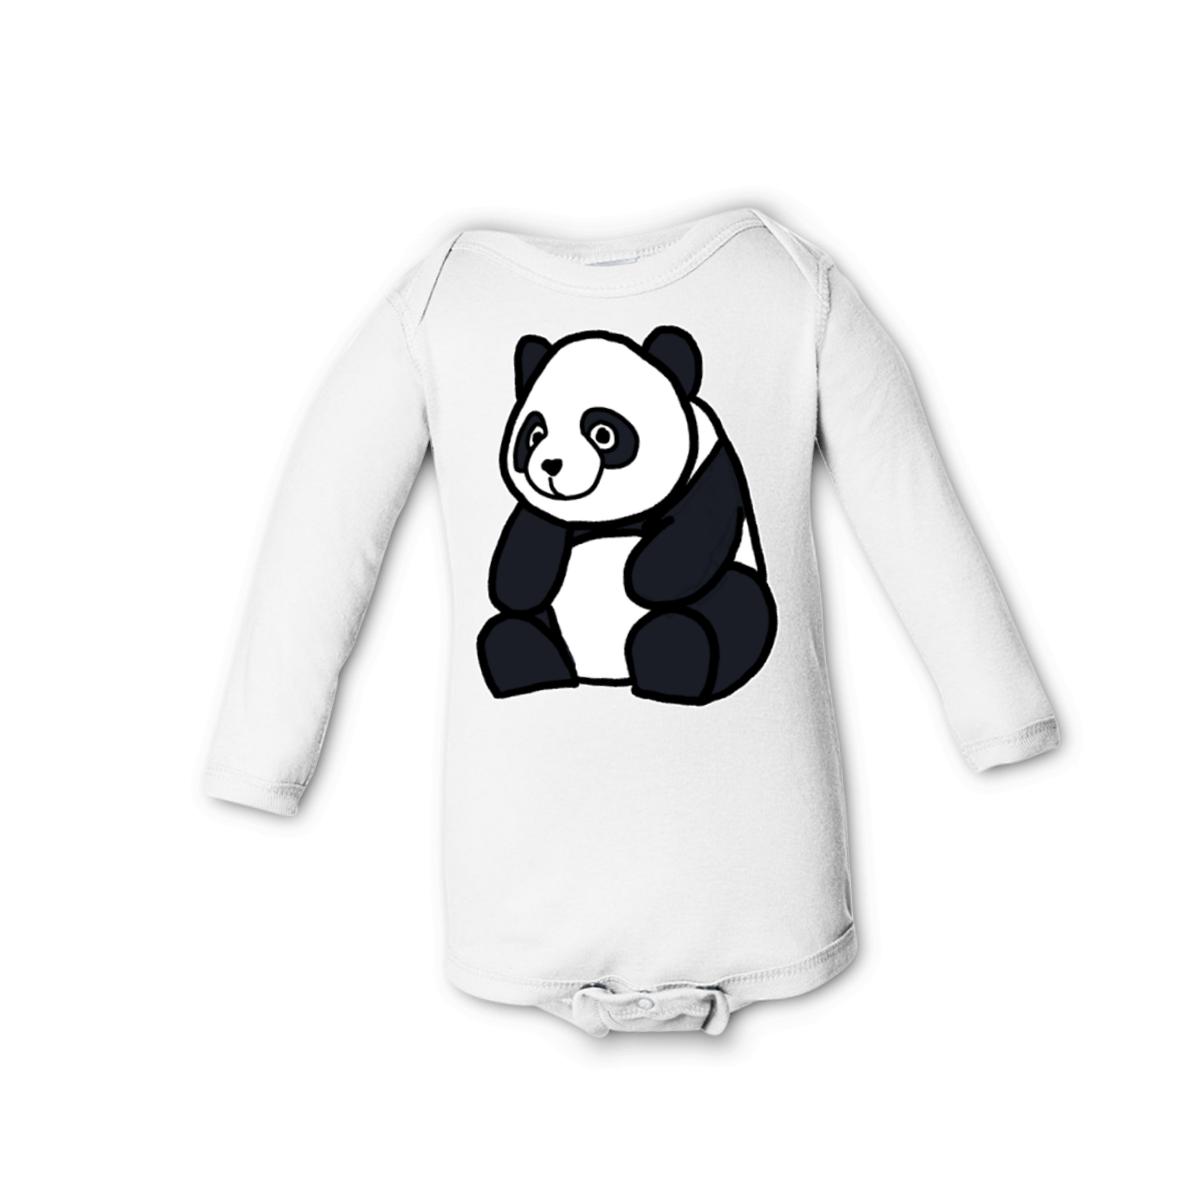 Panda Long Sleeve Onesie 18M white